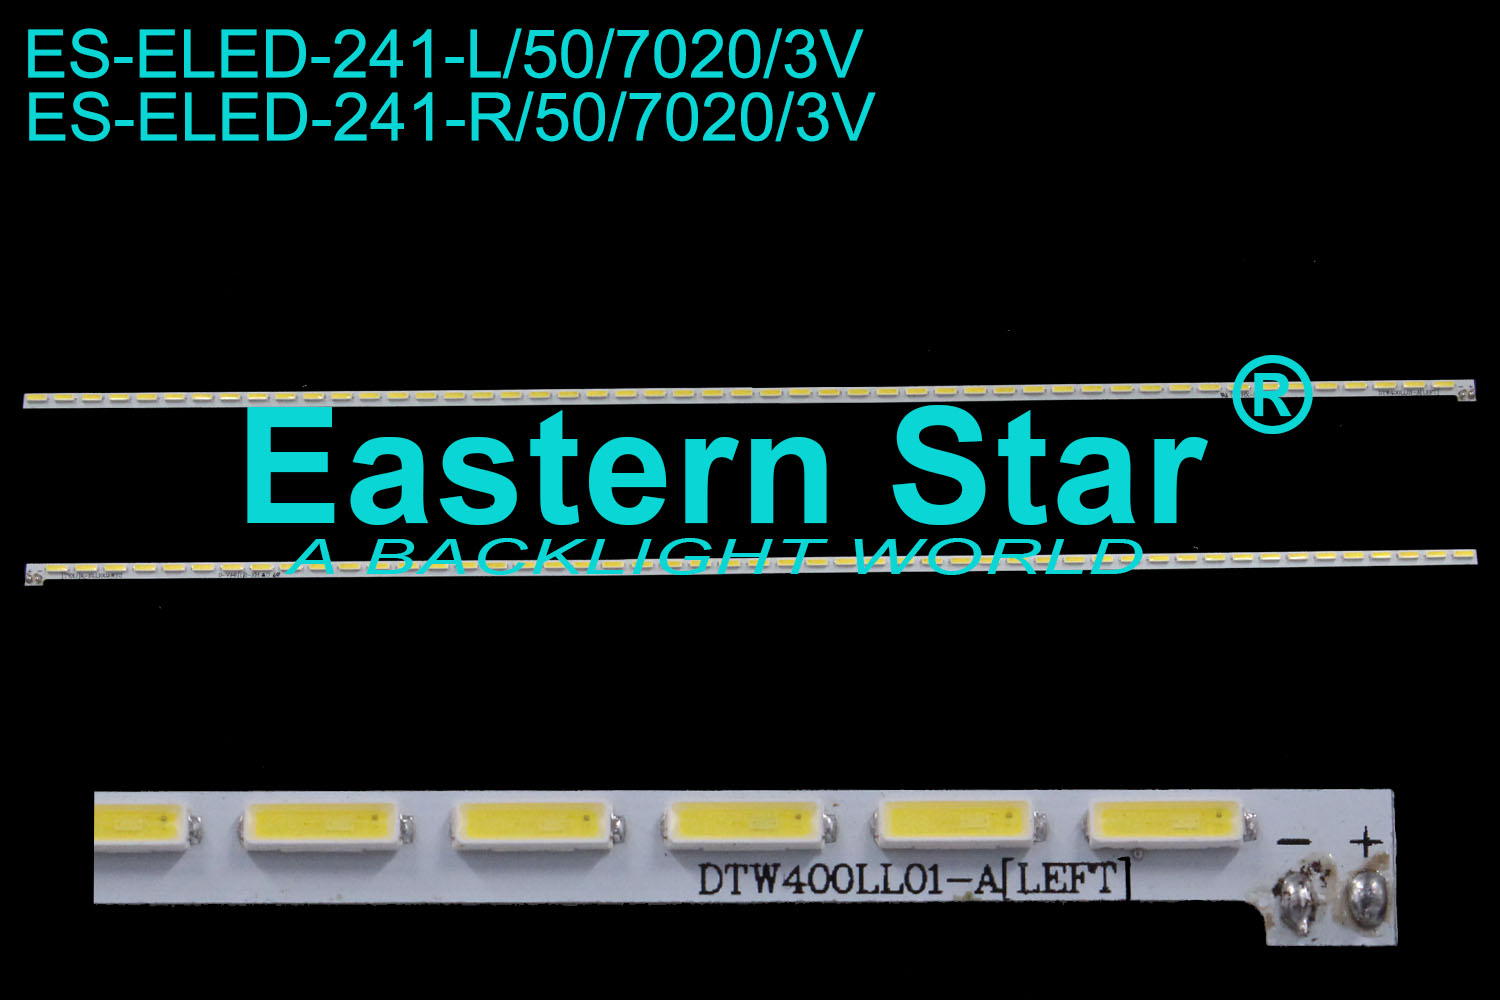 ES-ELED-241 ELED/EDGE TV backlight 40'' 50LEDs use for LG DTW400LL01-A [LEFT]/[RIGHT] LED STRIPS(2)